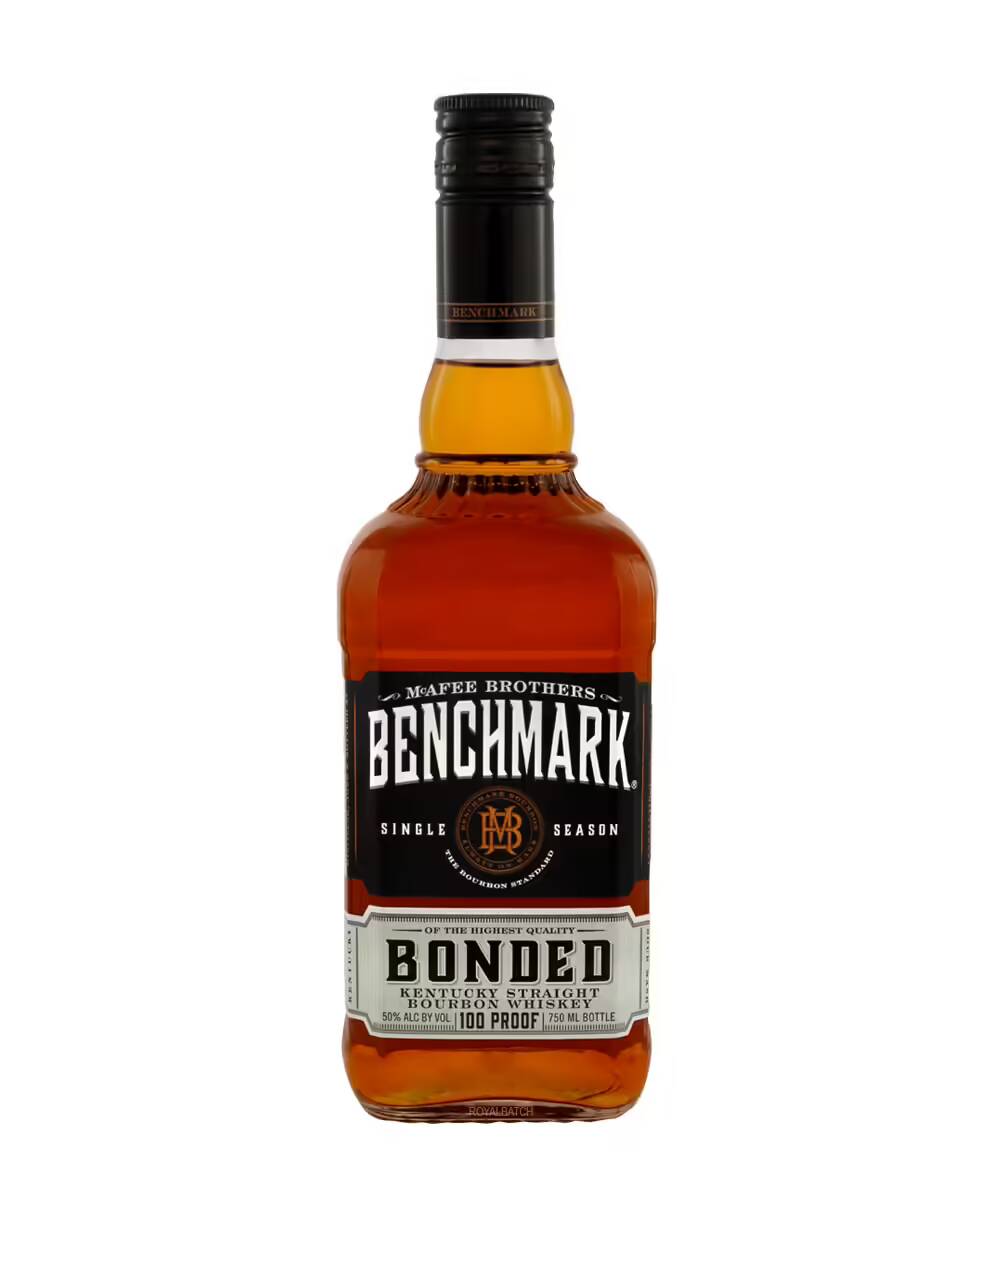 Benchmark Bonded Kentucky Straight Bourbon Whiskey